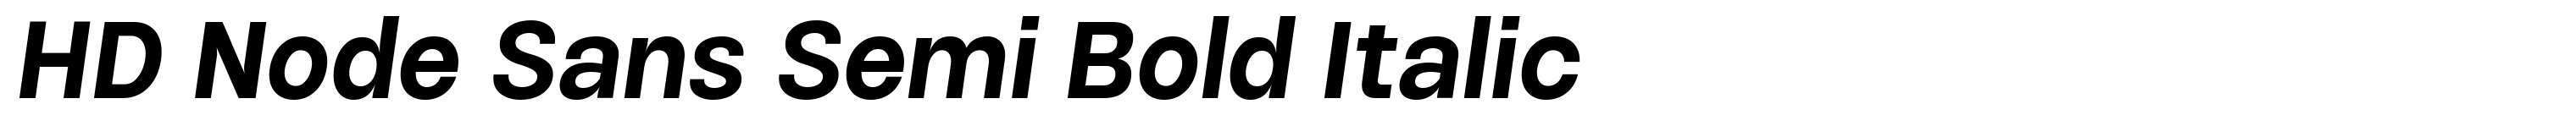 HD Node Sans Semi Bold Italic